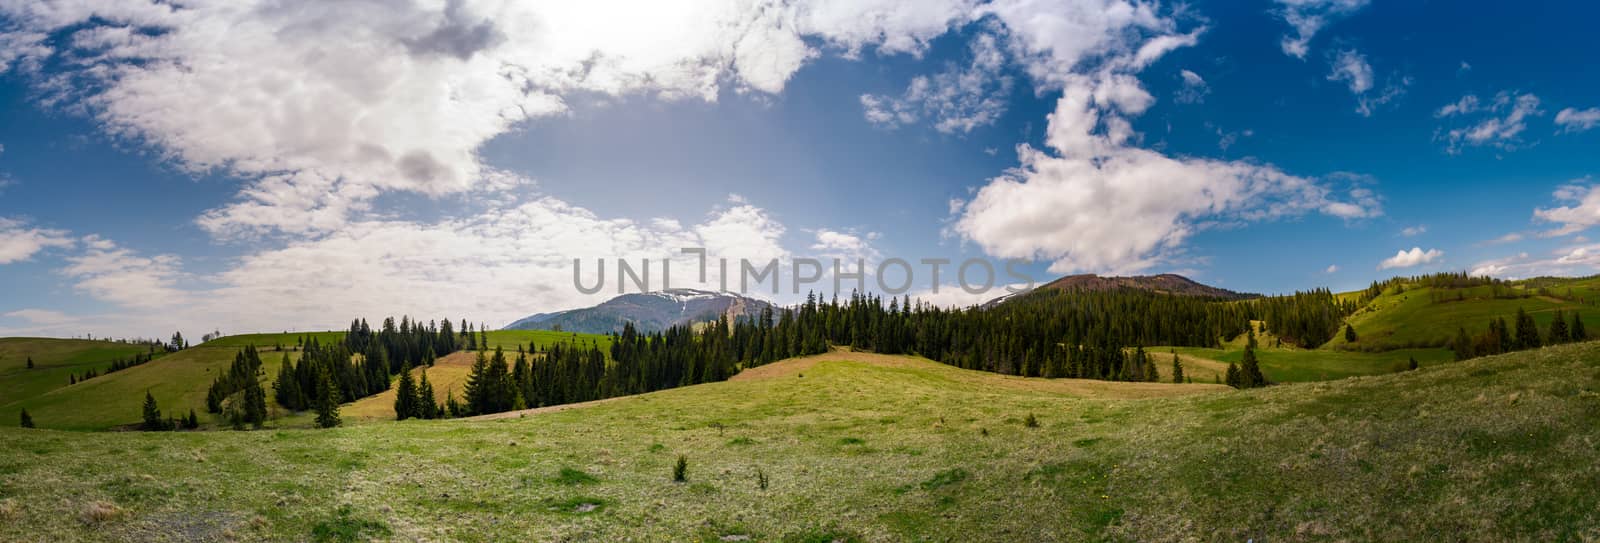 beautiful panorama of mountainous area in spring by Pellinni